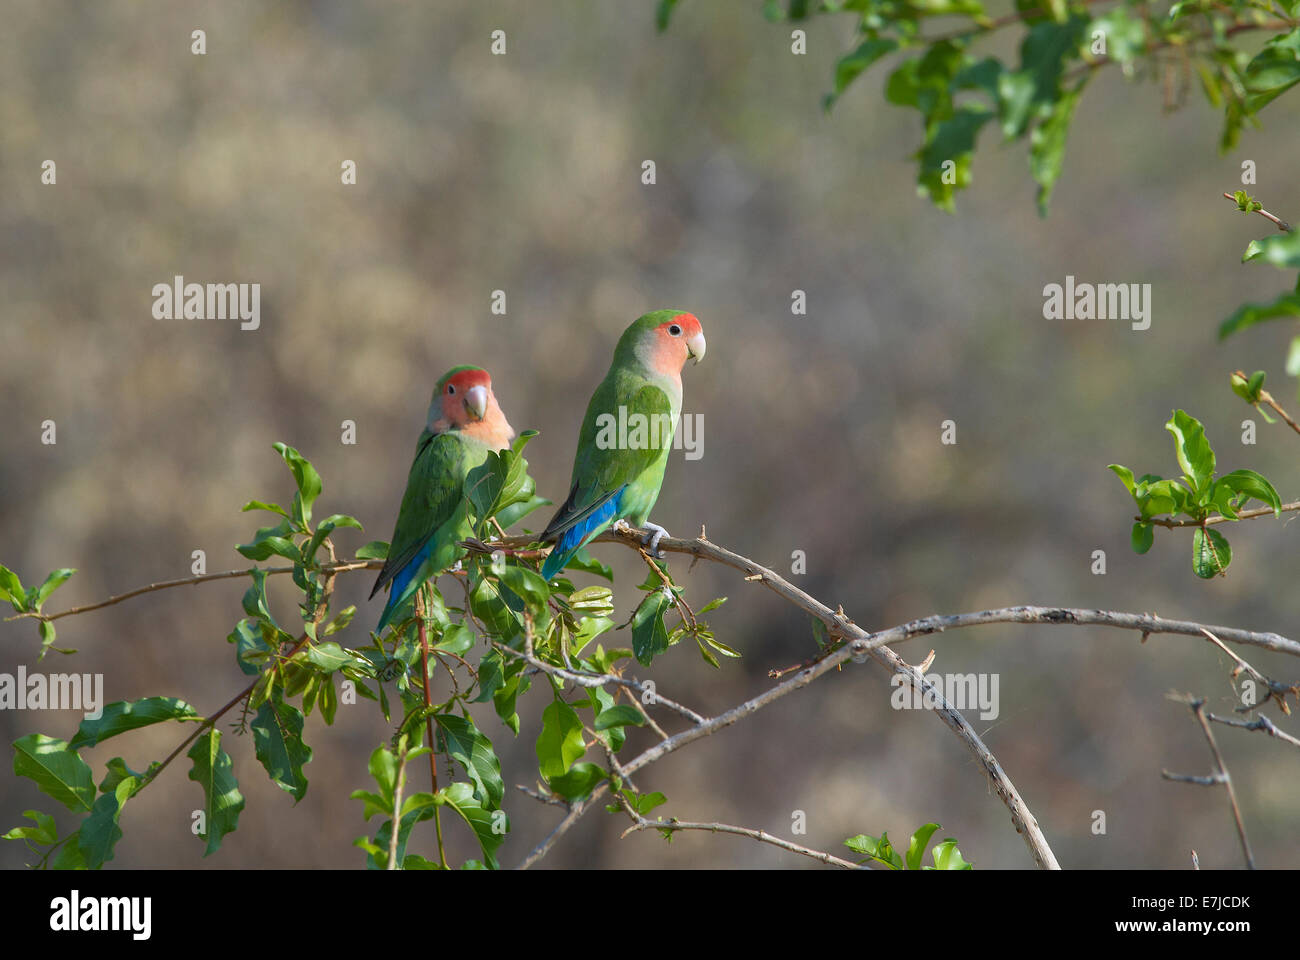 Africa, Erongo, Namibia, to parrots, Psittaciformes, shrubs, bushes, birds, Stock Photo